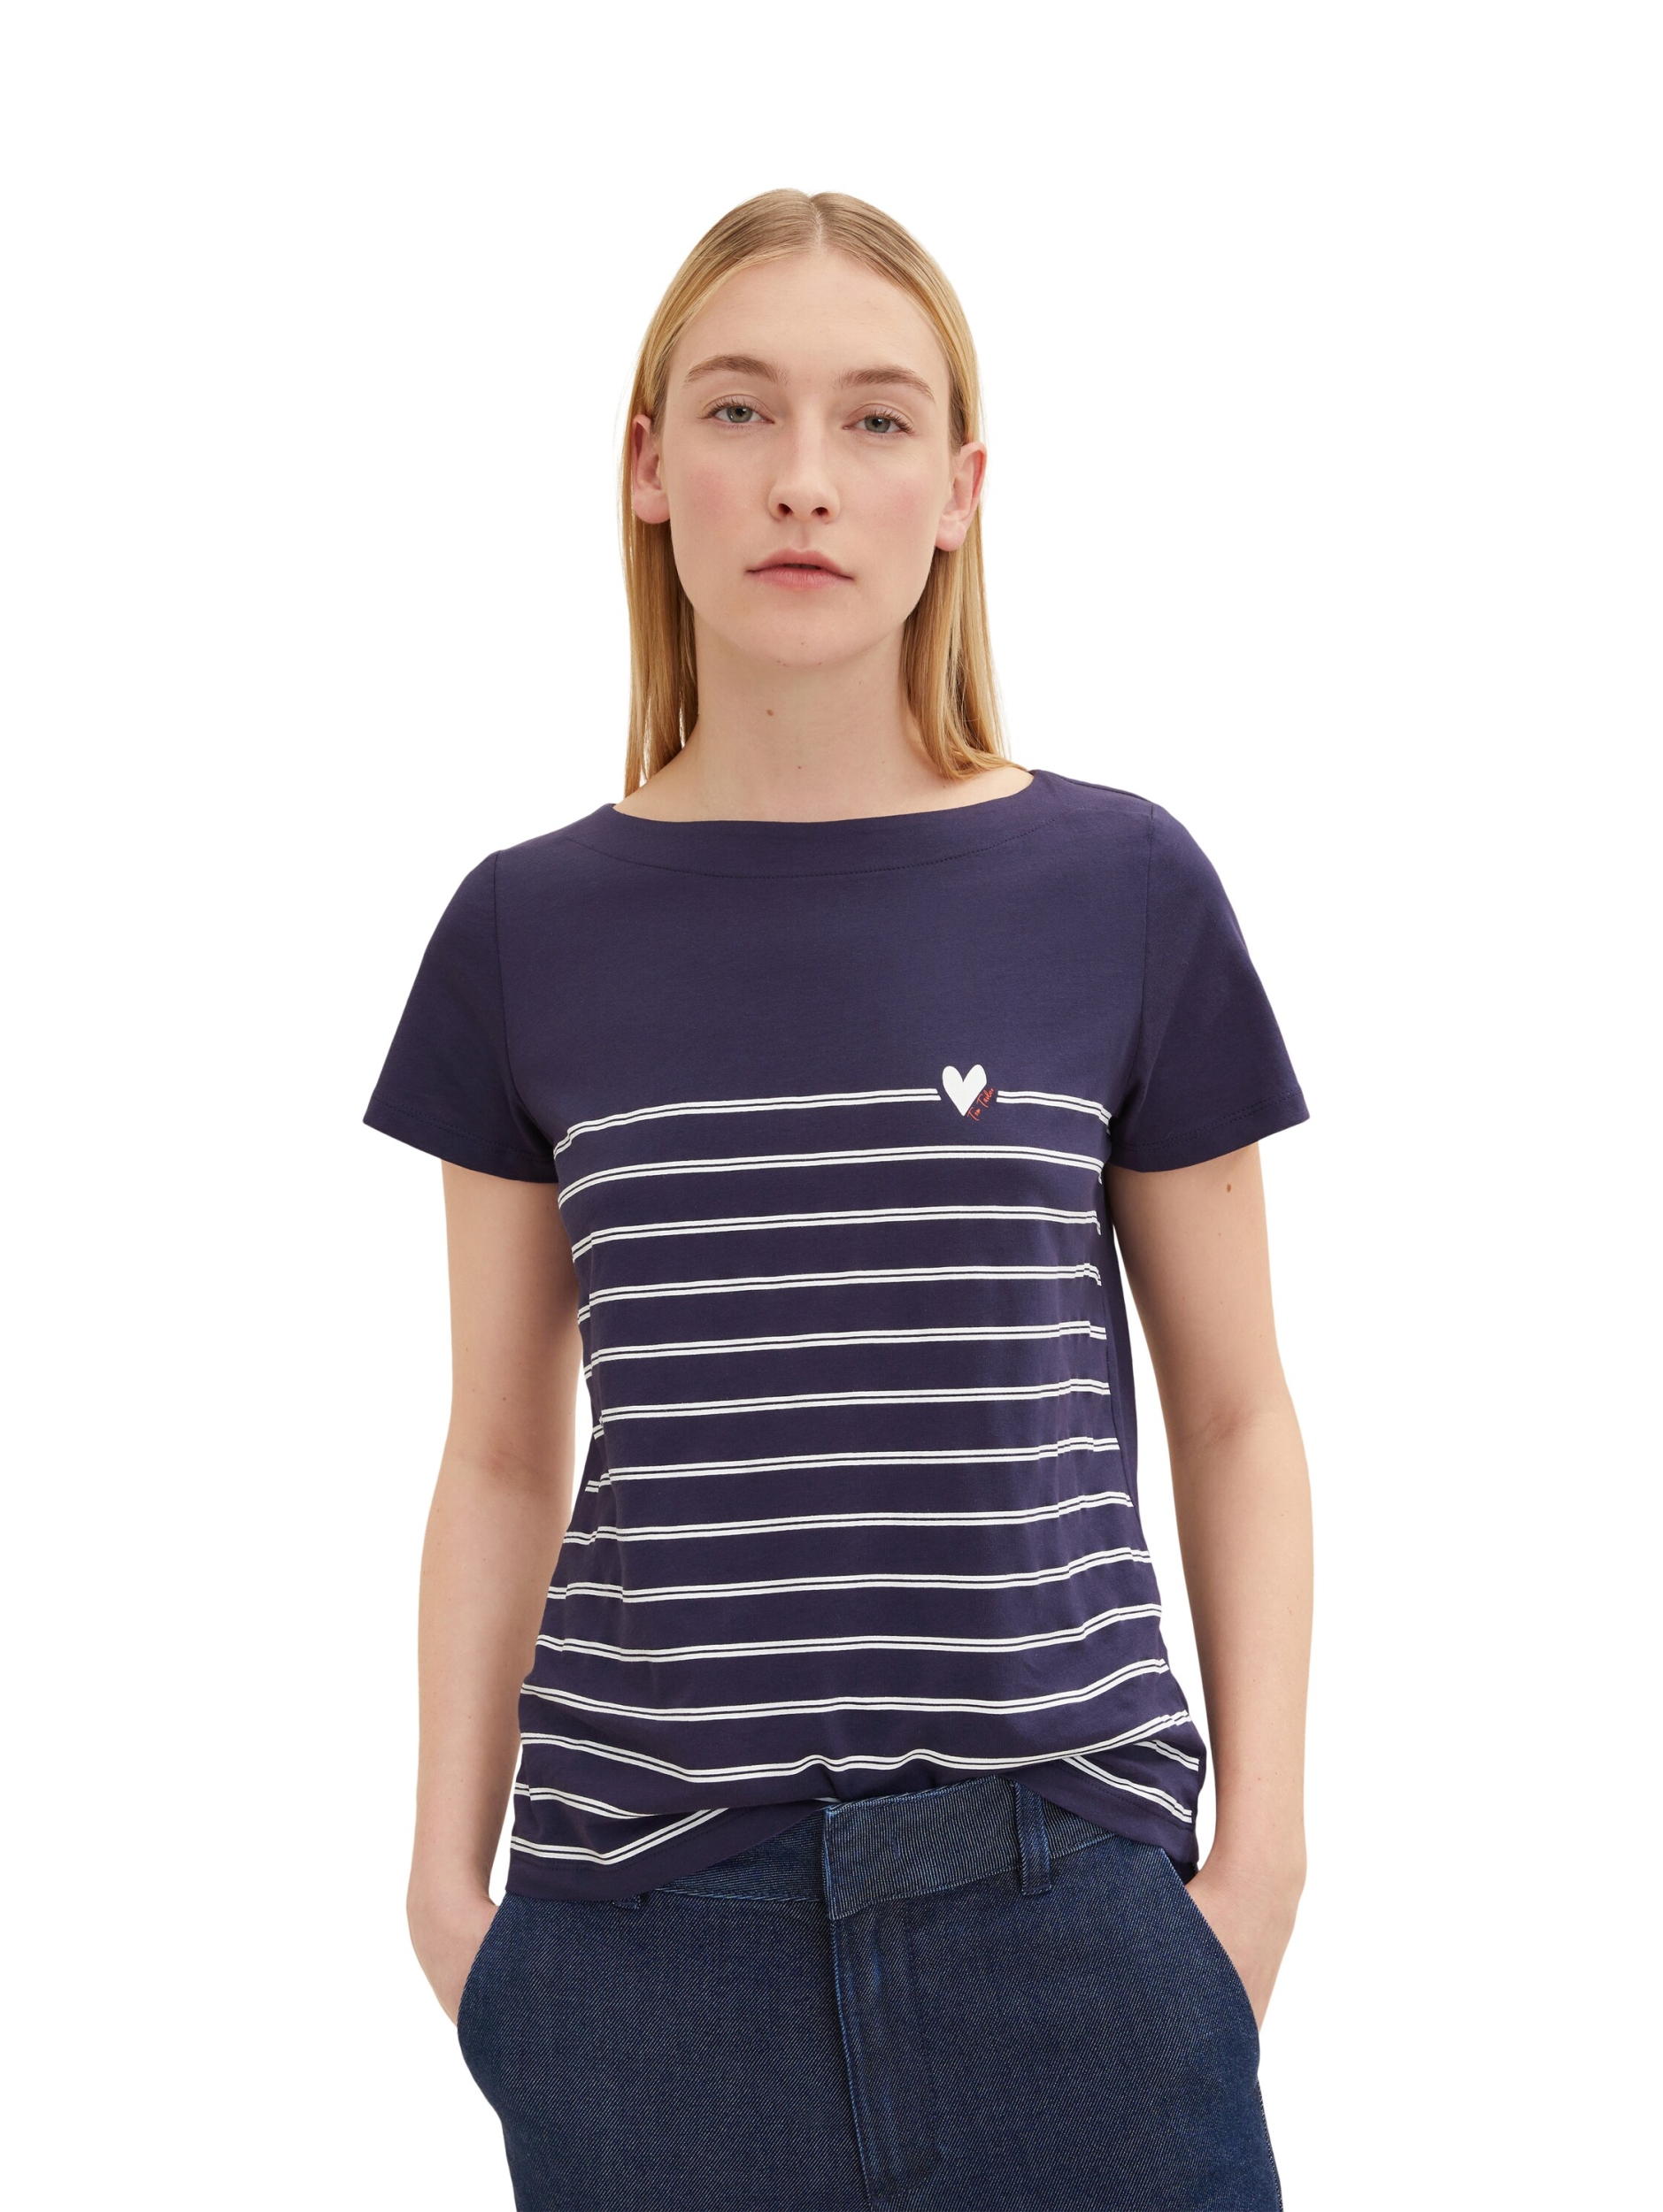 Tom Tailor T-shirt boat neck 11331 online kaufen